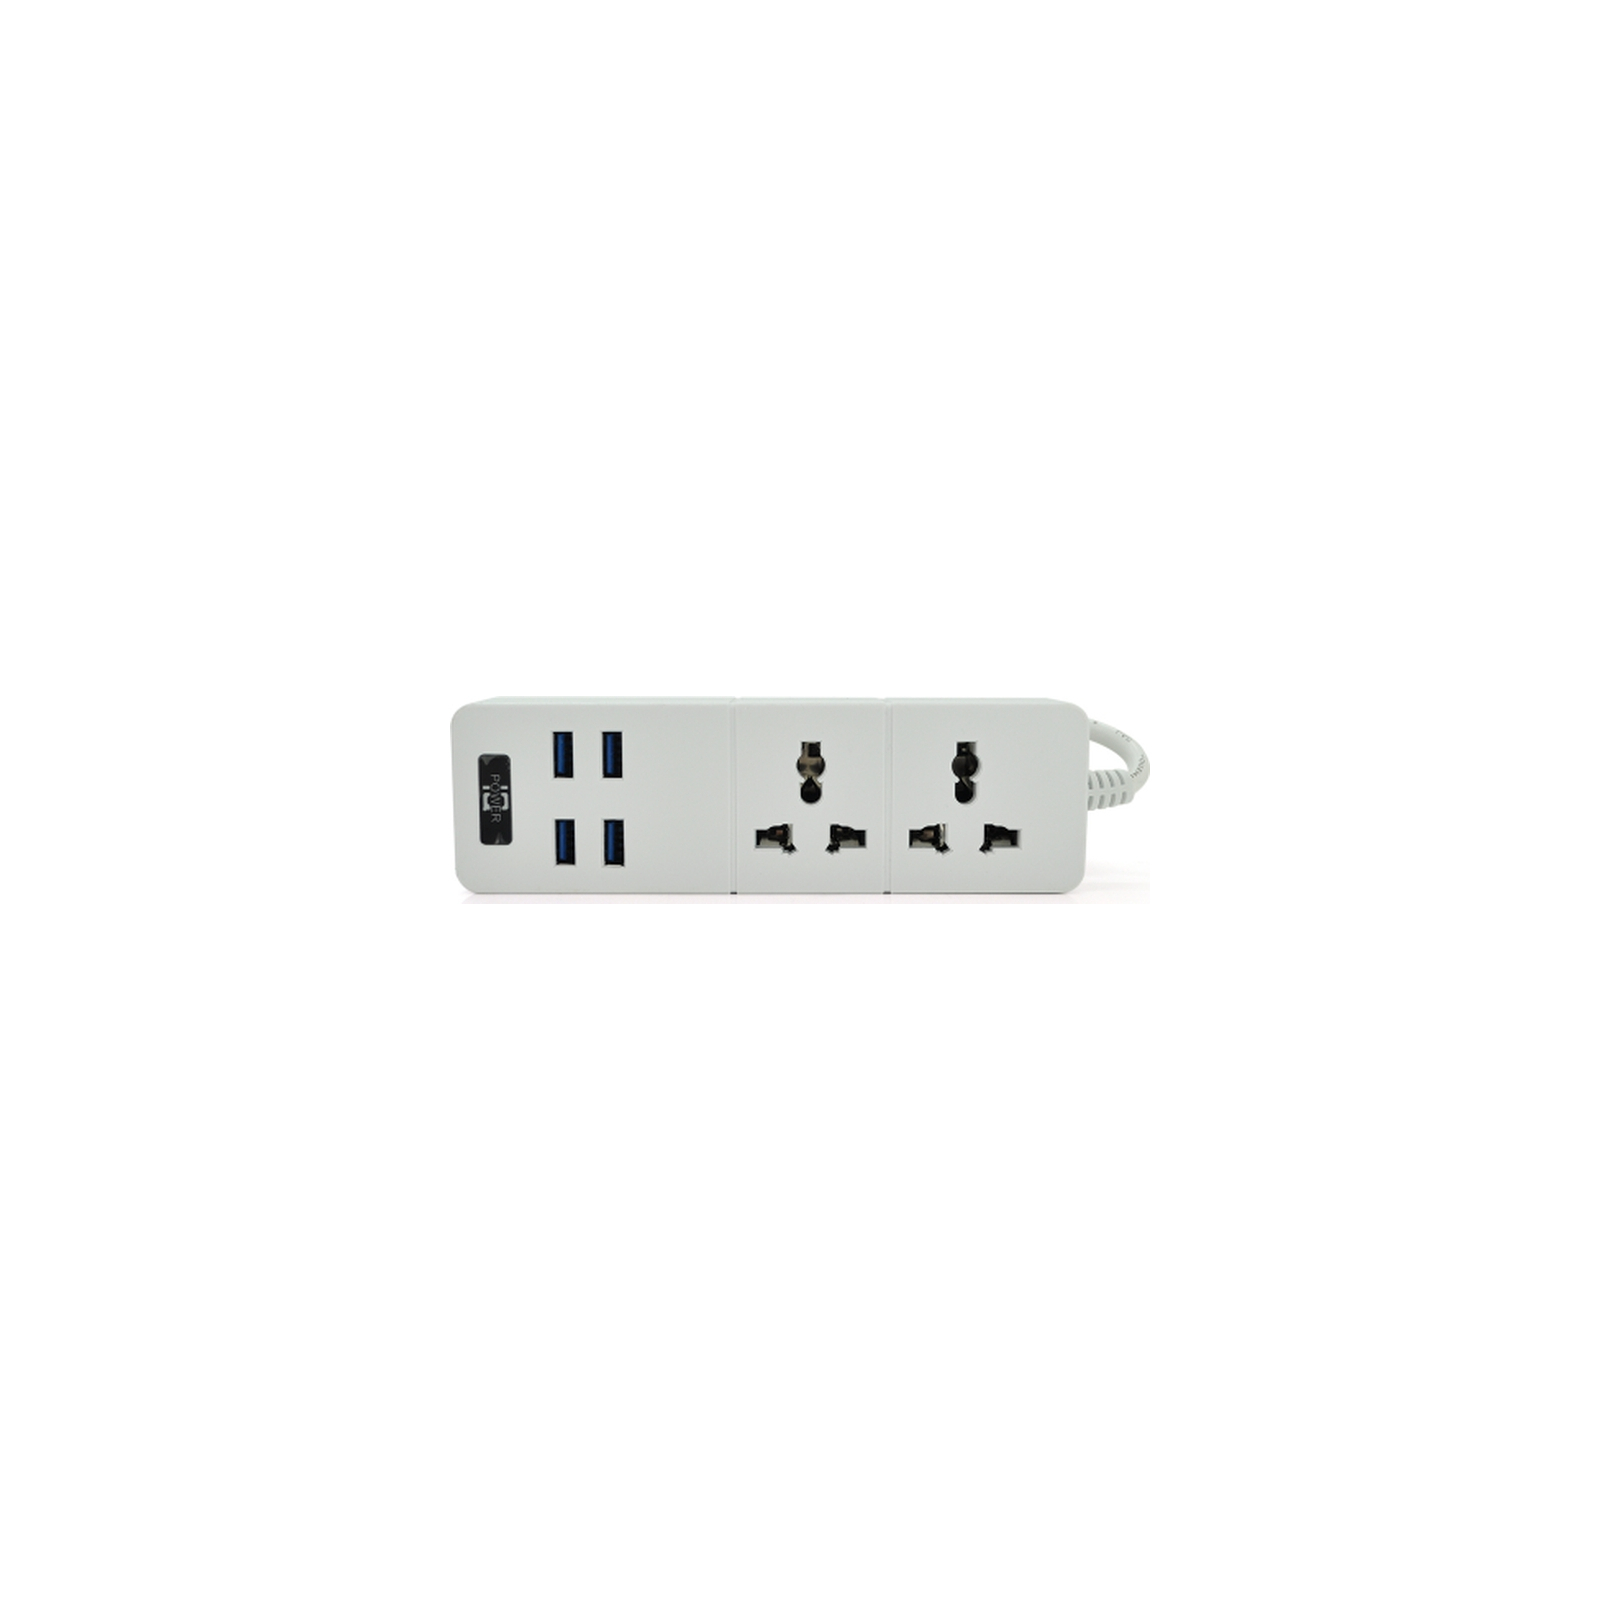 Сетевой фильтр питания Voltronic TВ-Т07, 2роз, 4*USB White (ТВ-Т07-White)